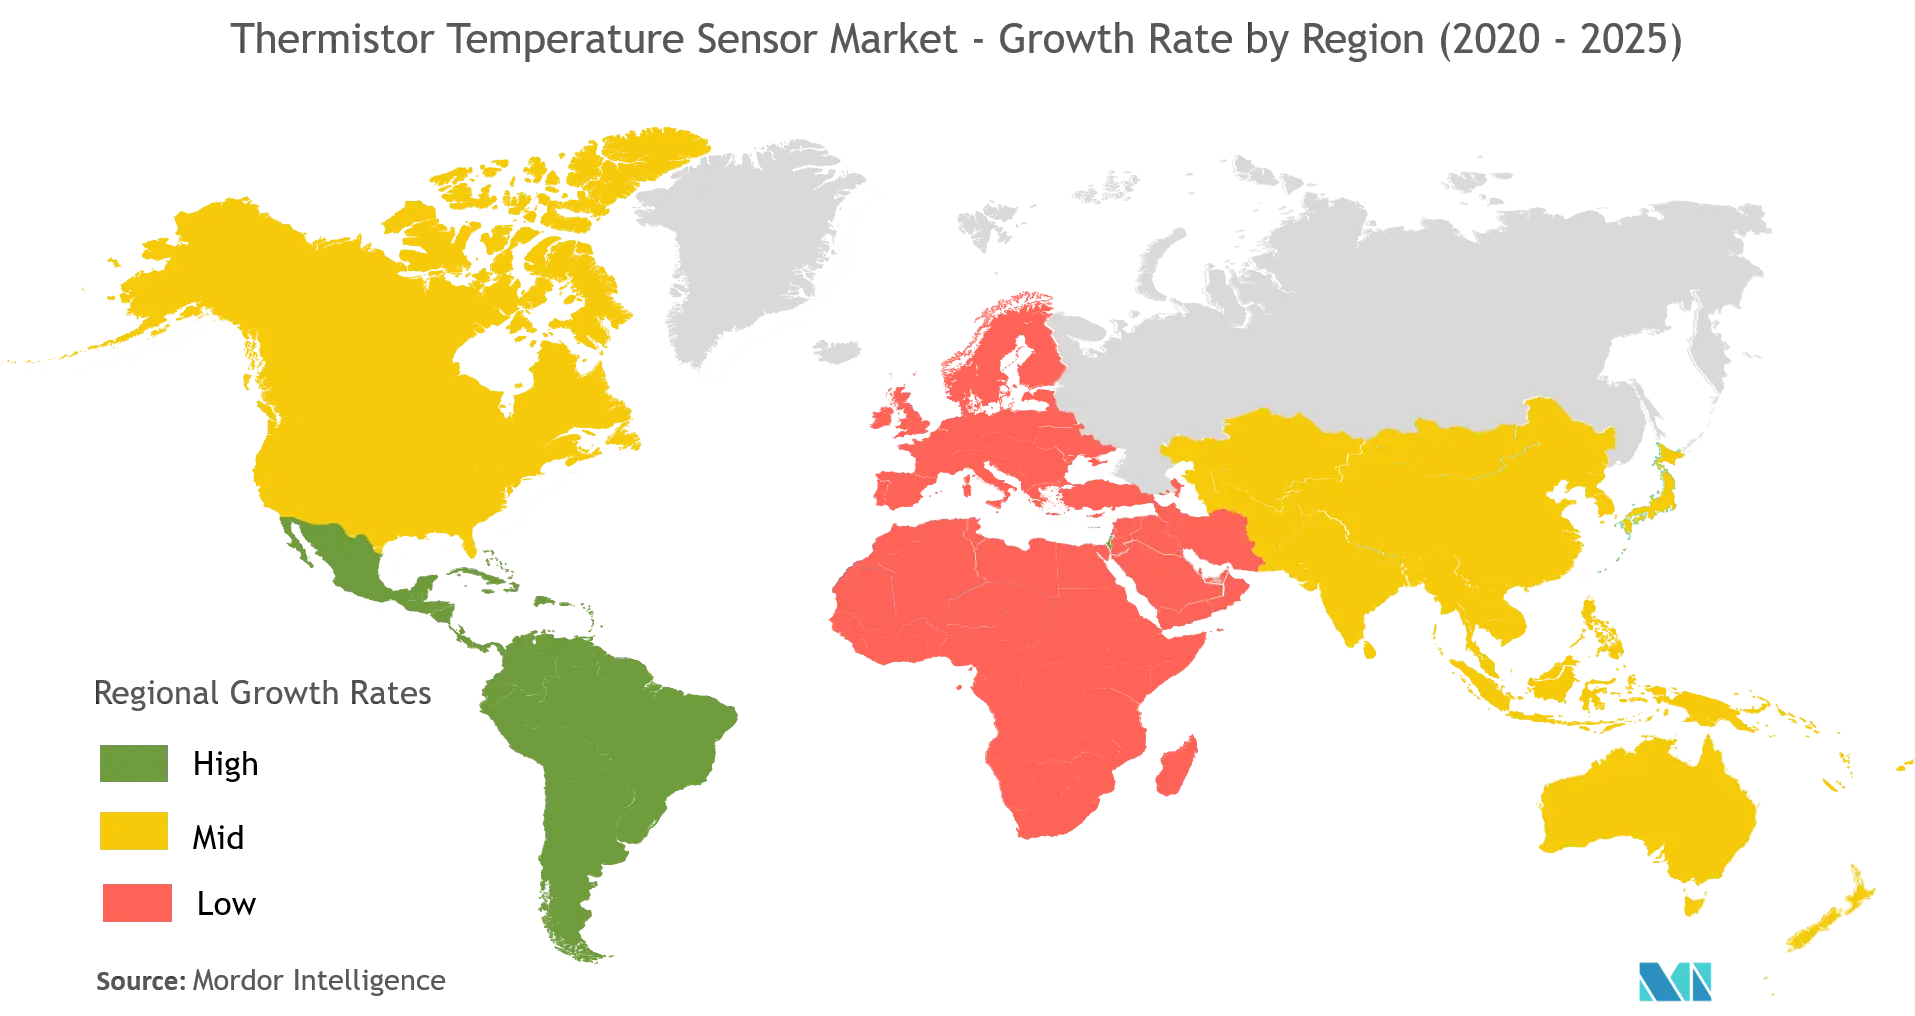 Thermistor Temperature Sensor Market Growth